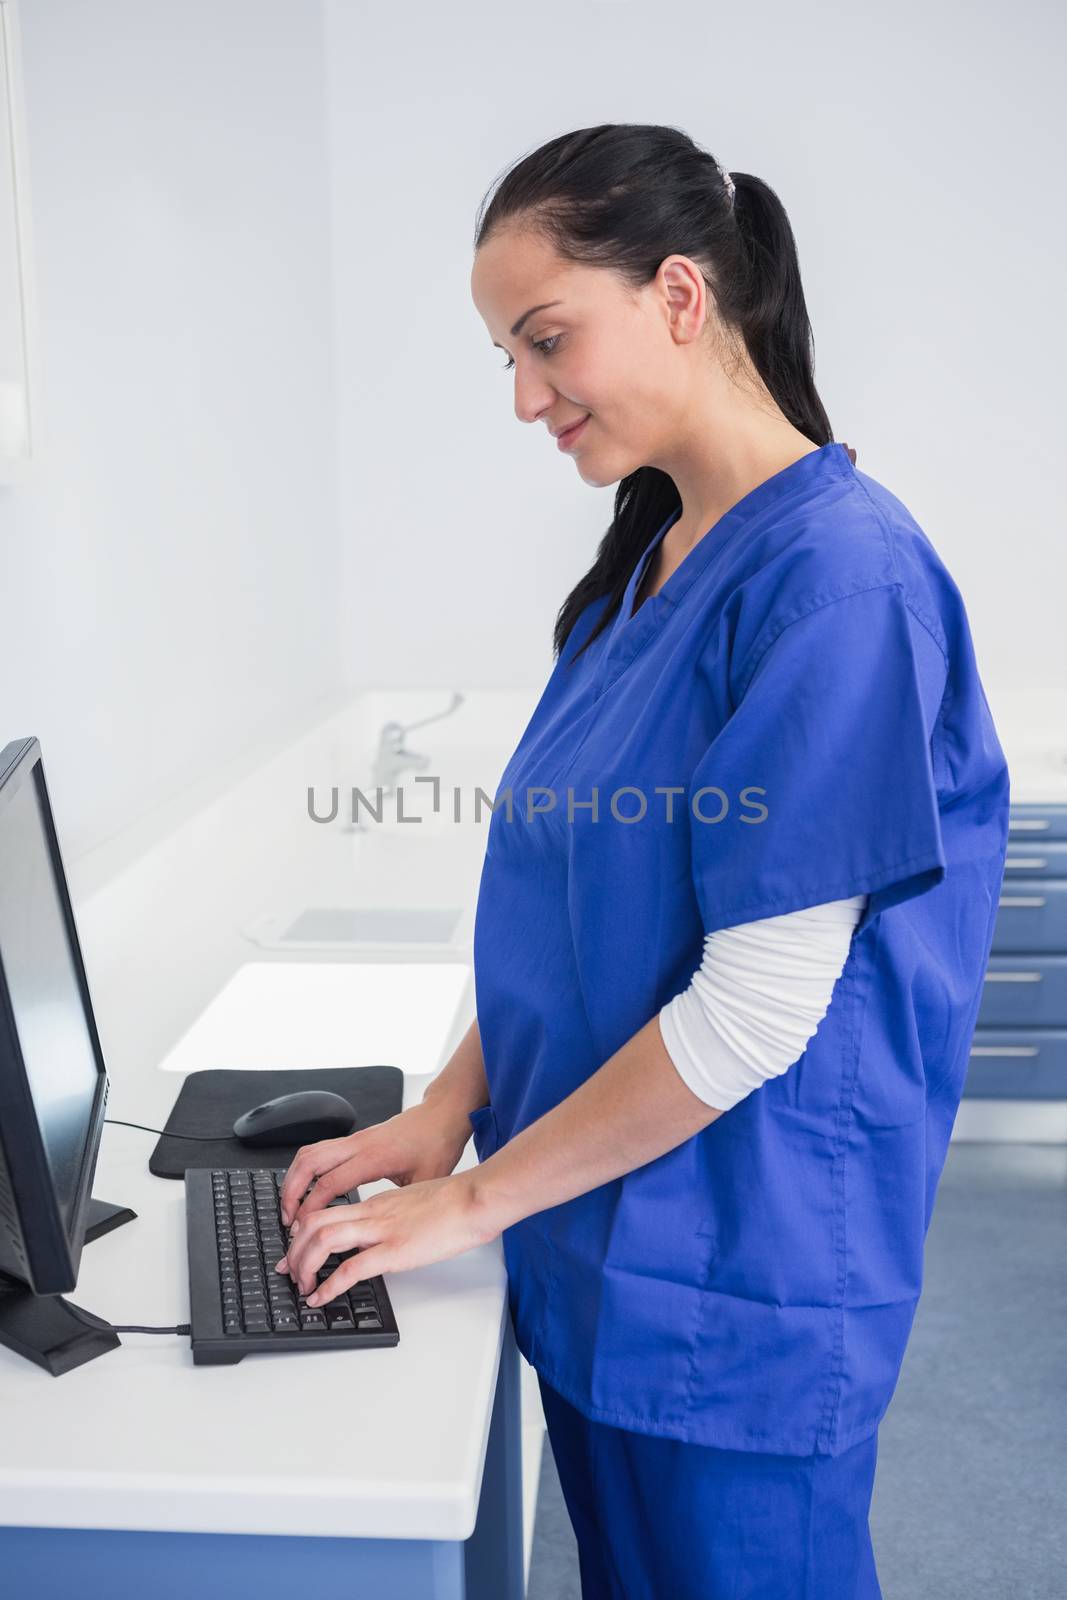 Smiling dentist typing on keyboard by Wavebreakmedia